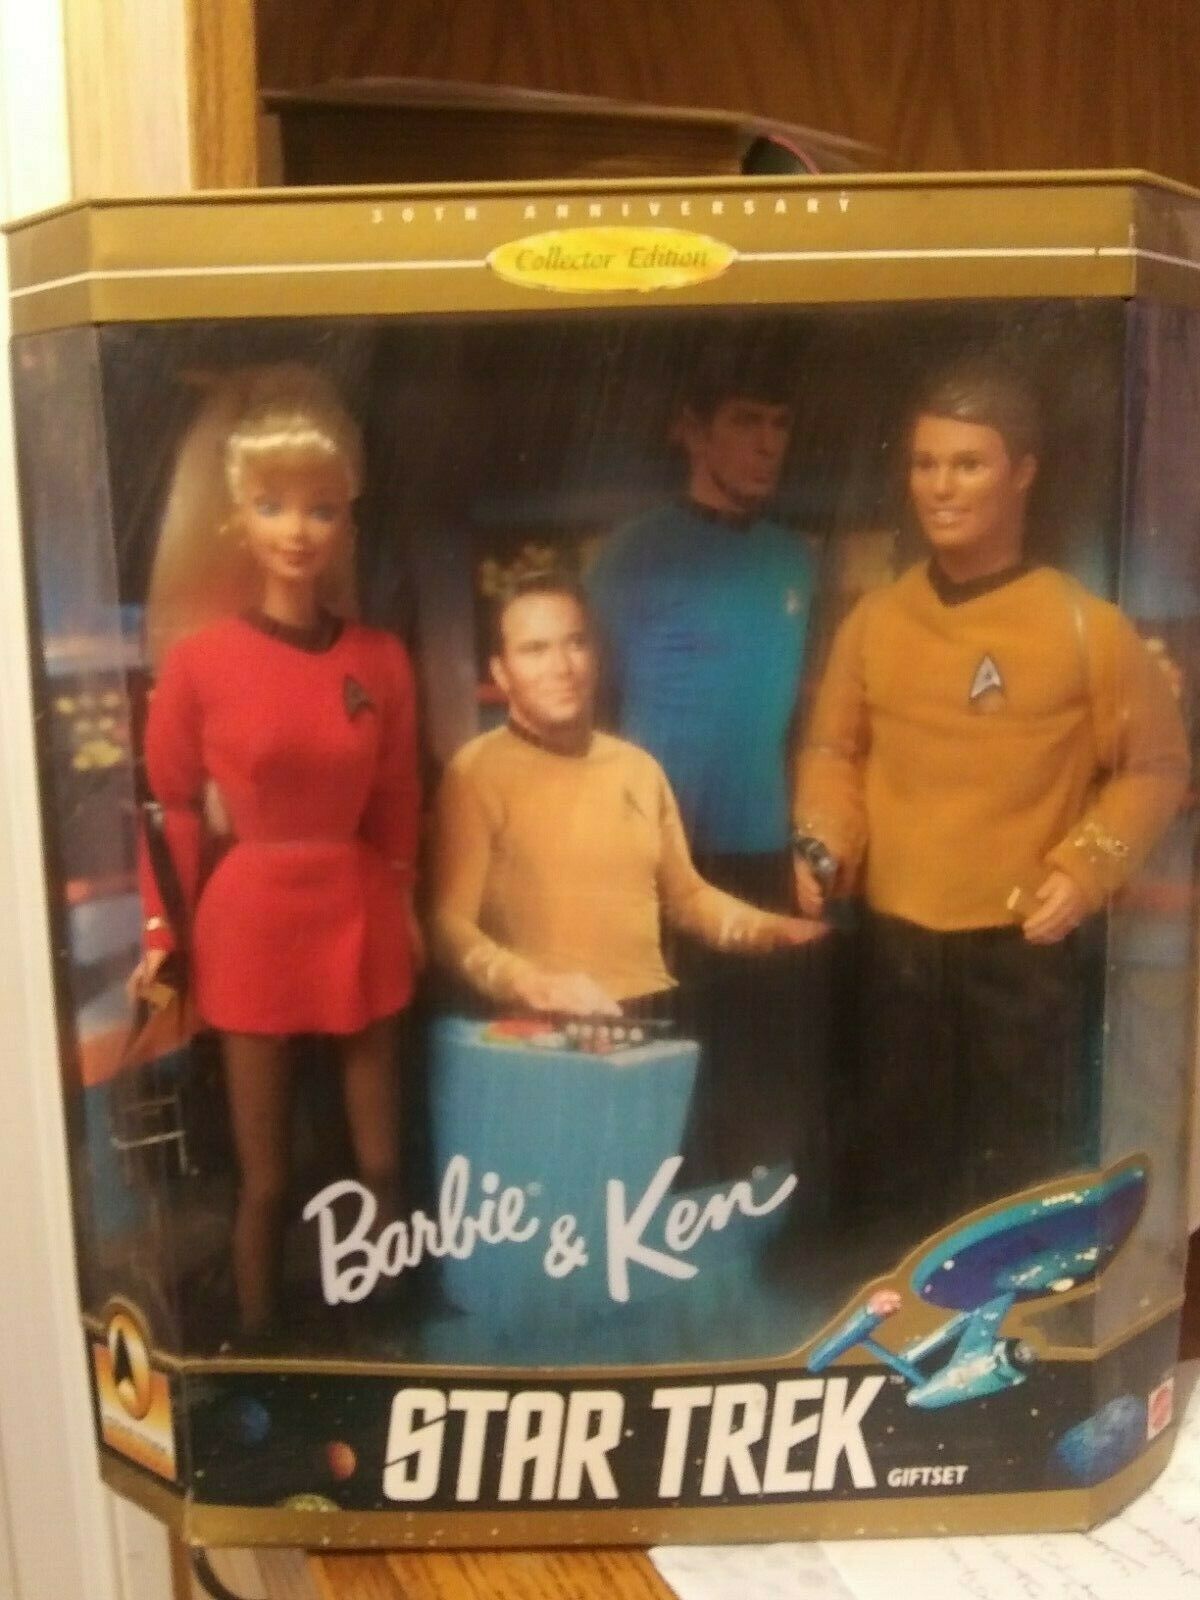 Star trek Barbie and Ken Giftset 1996